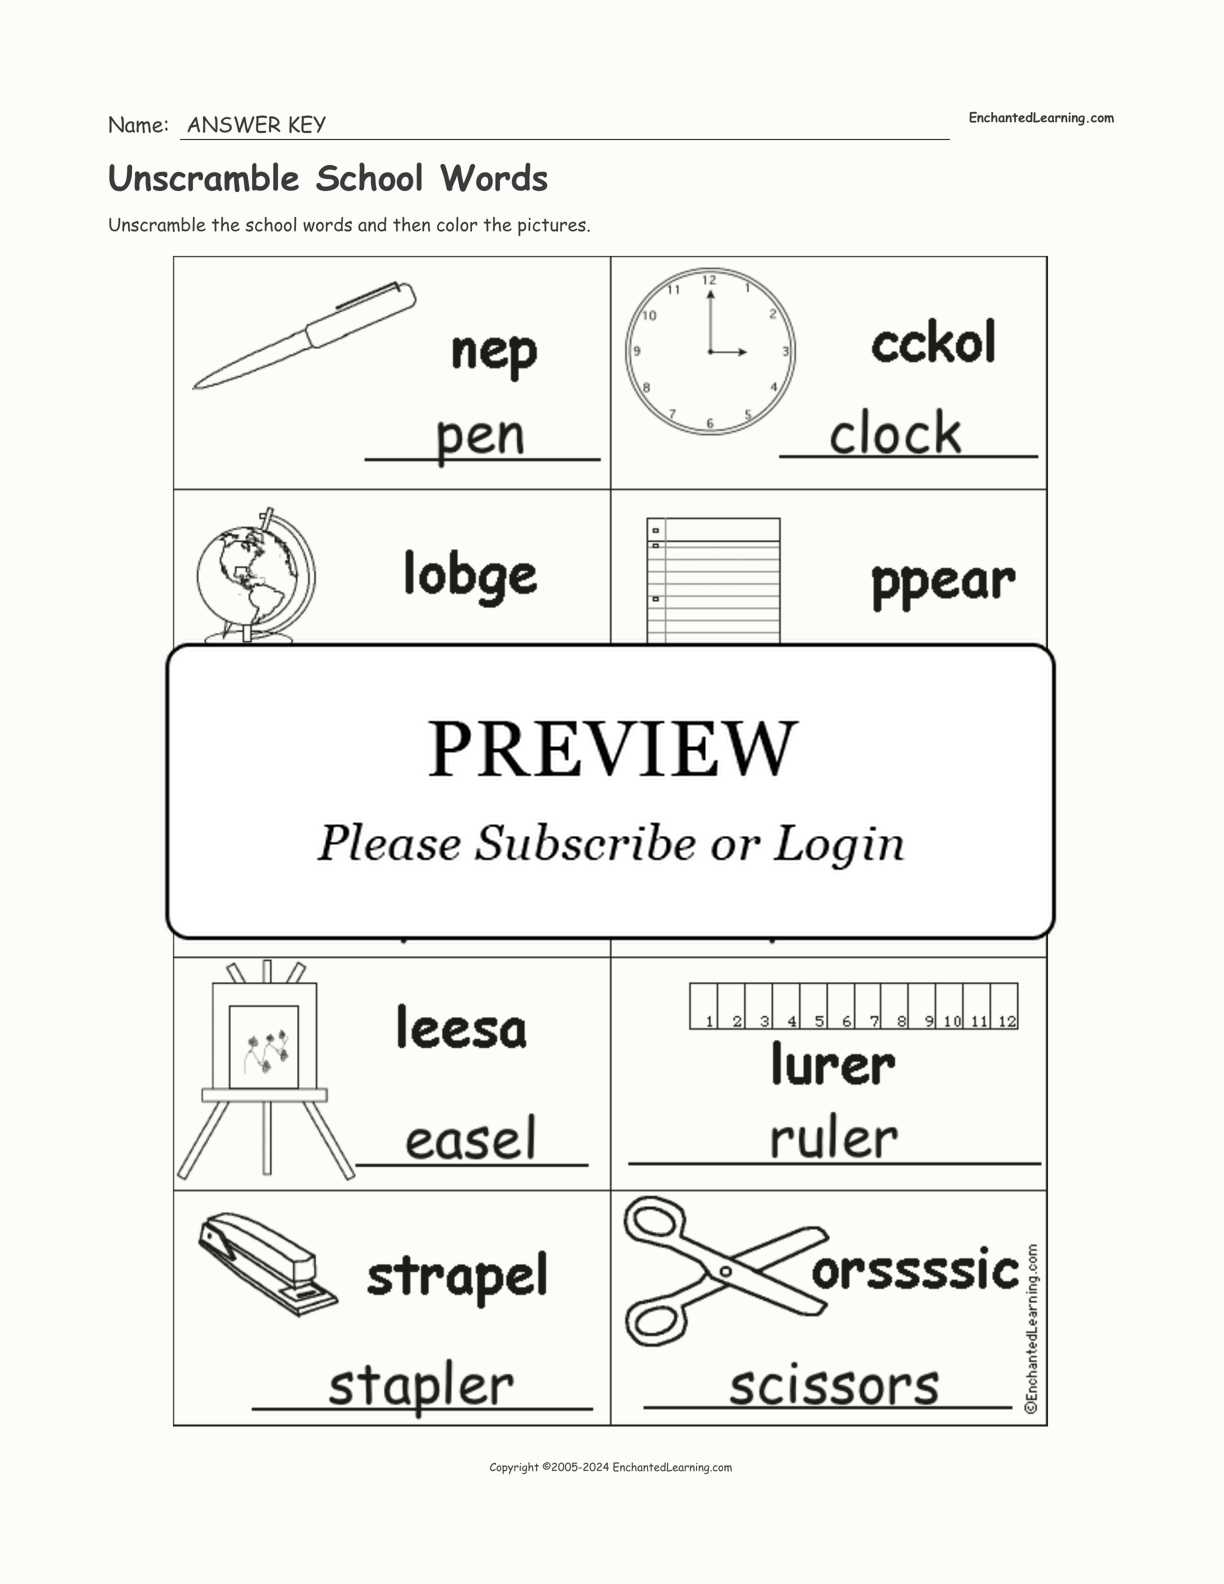 Unscramble School Words interactive worksheet page 2